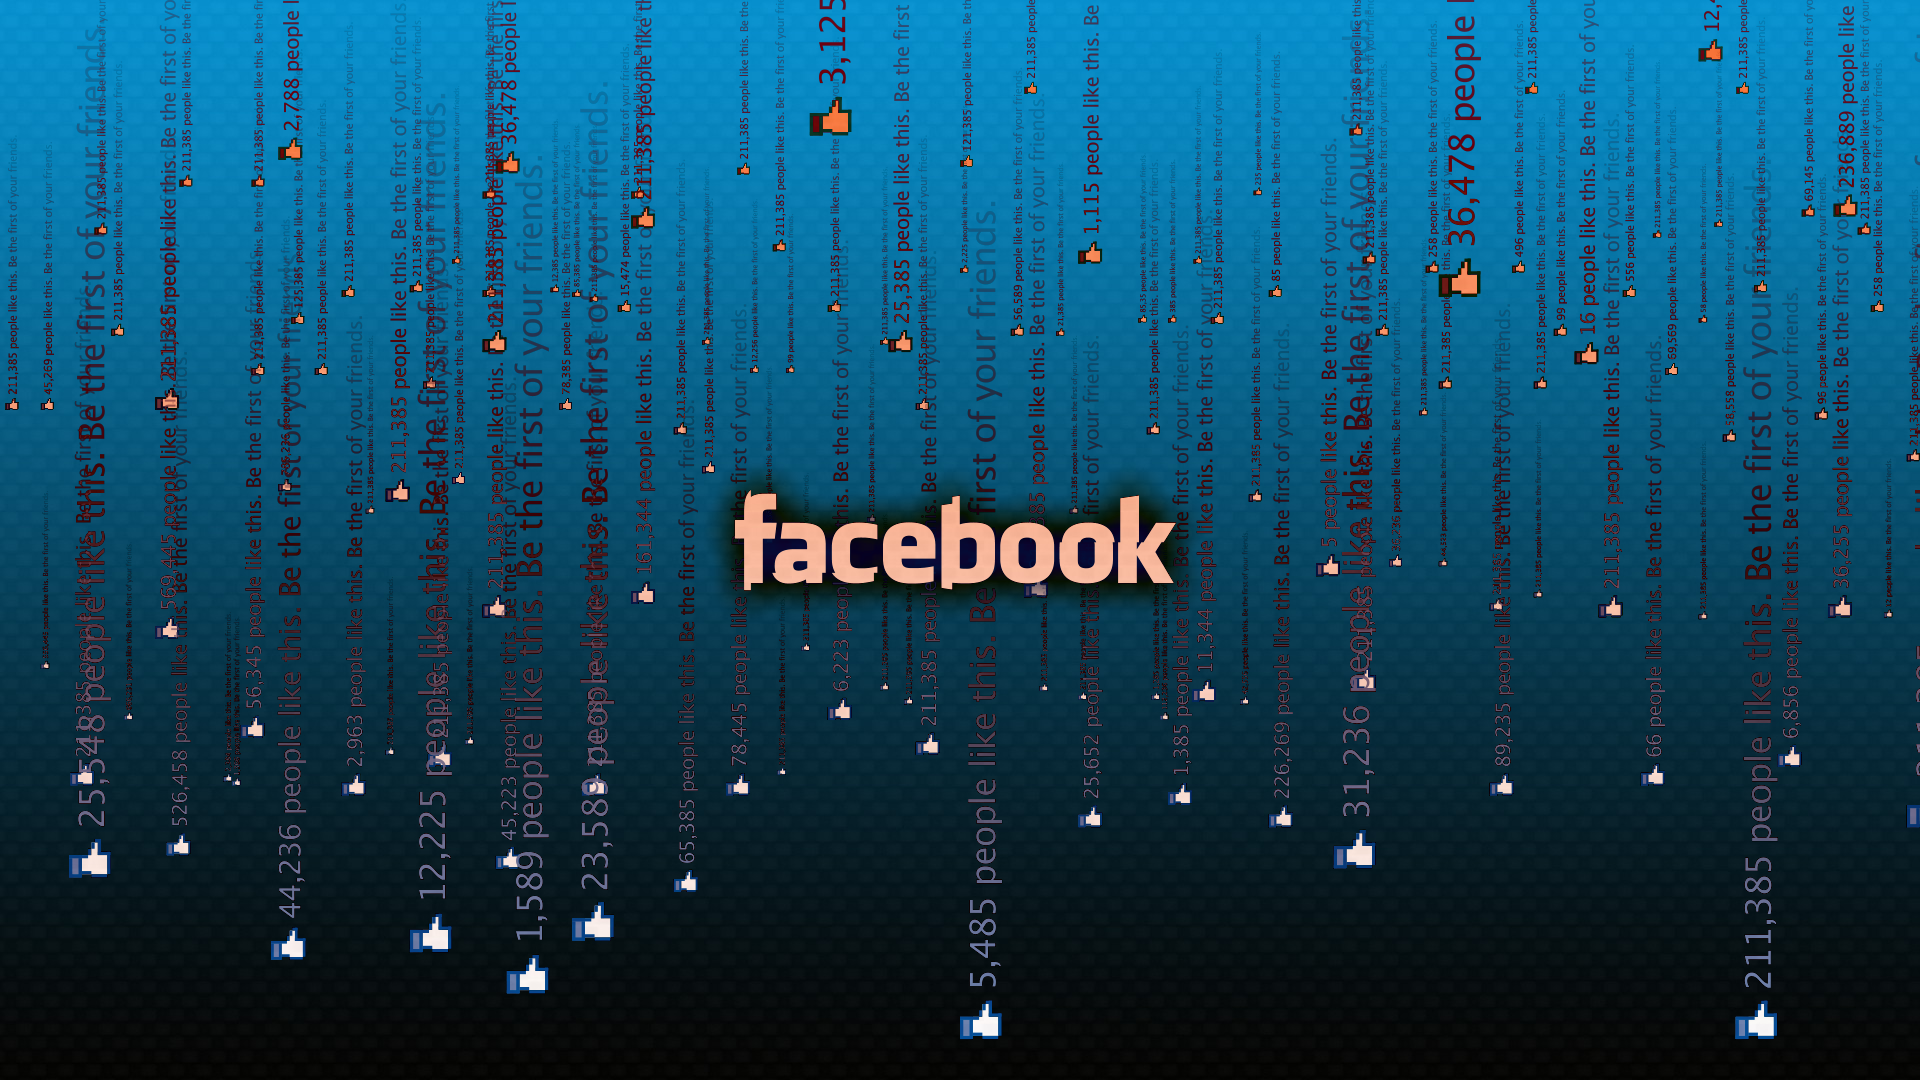 facebook wallpaper hd,blu,testo,acqua,font,cielo